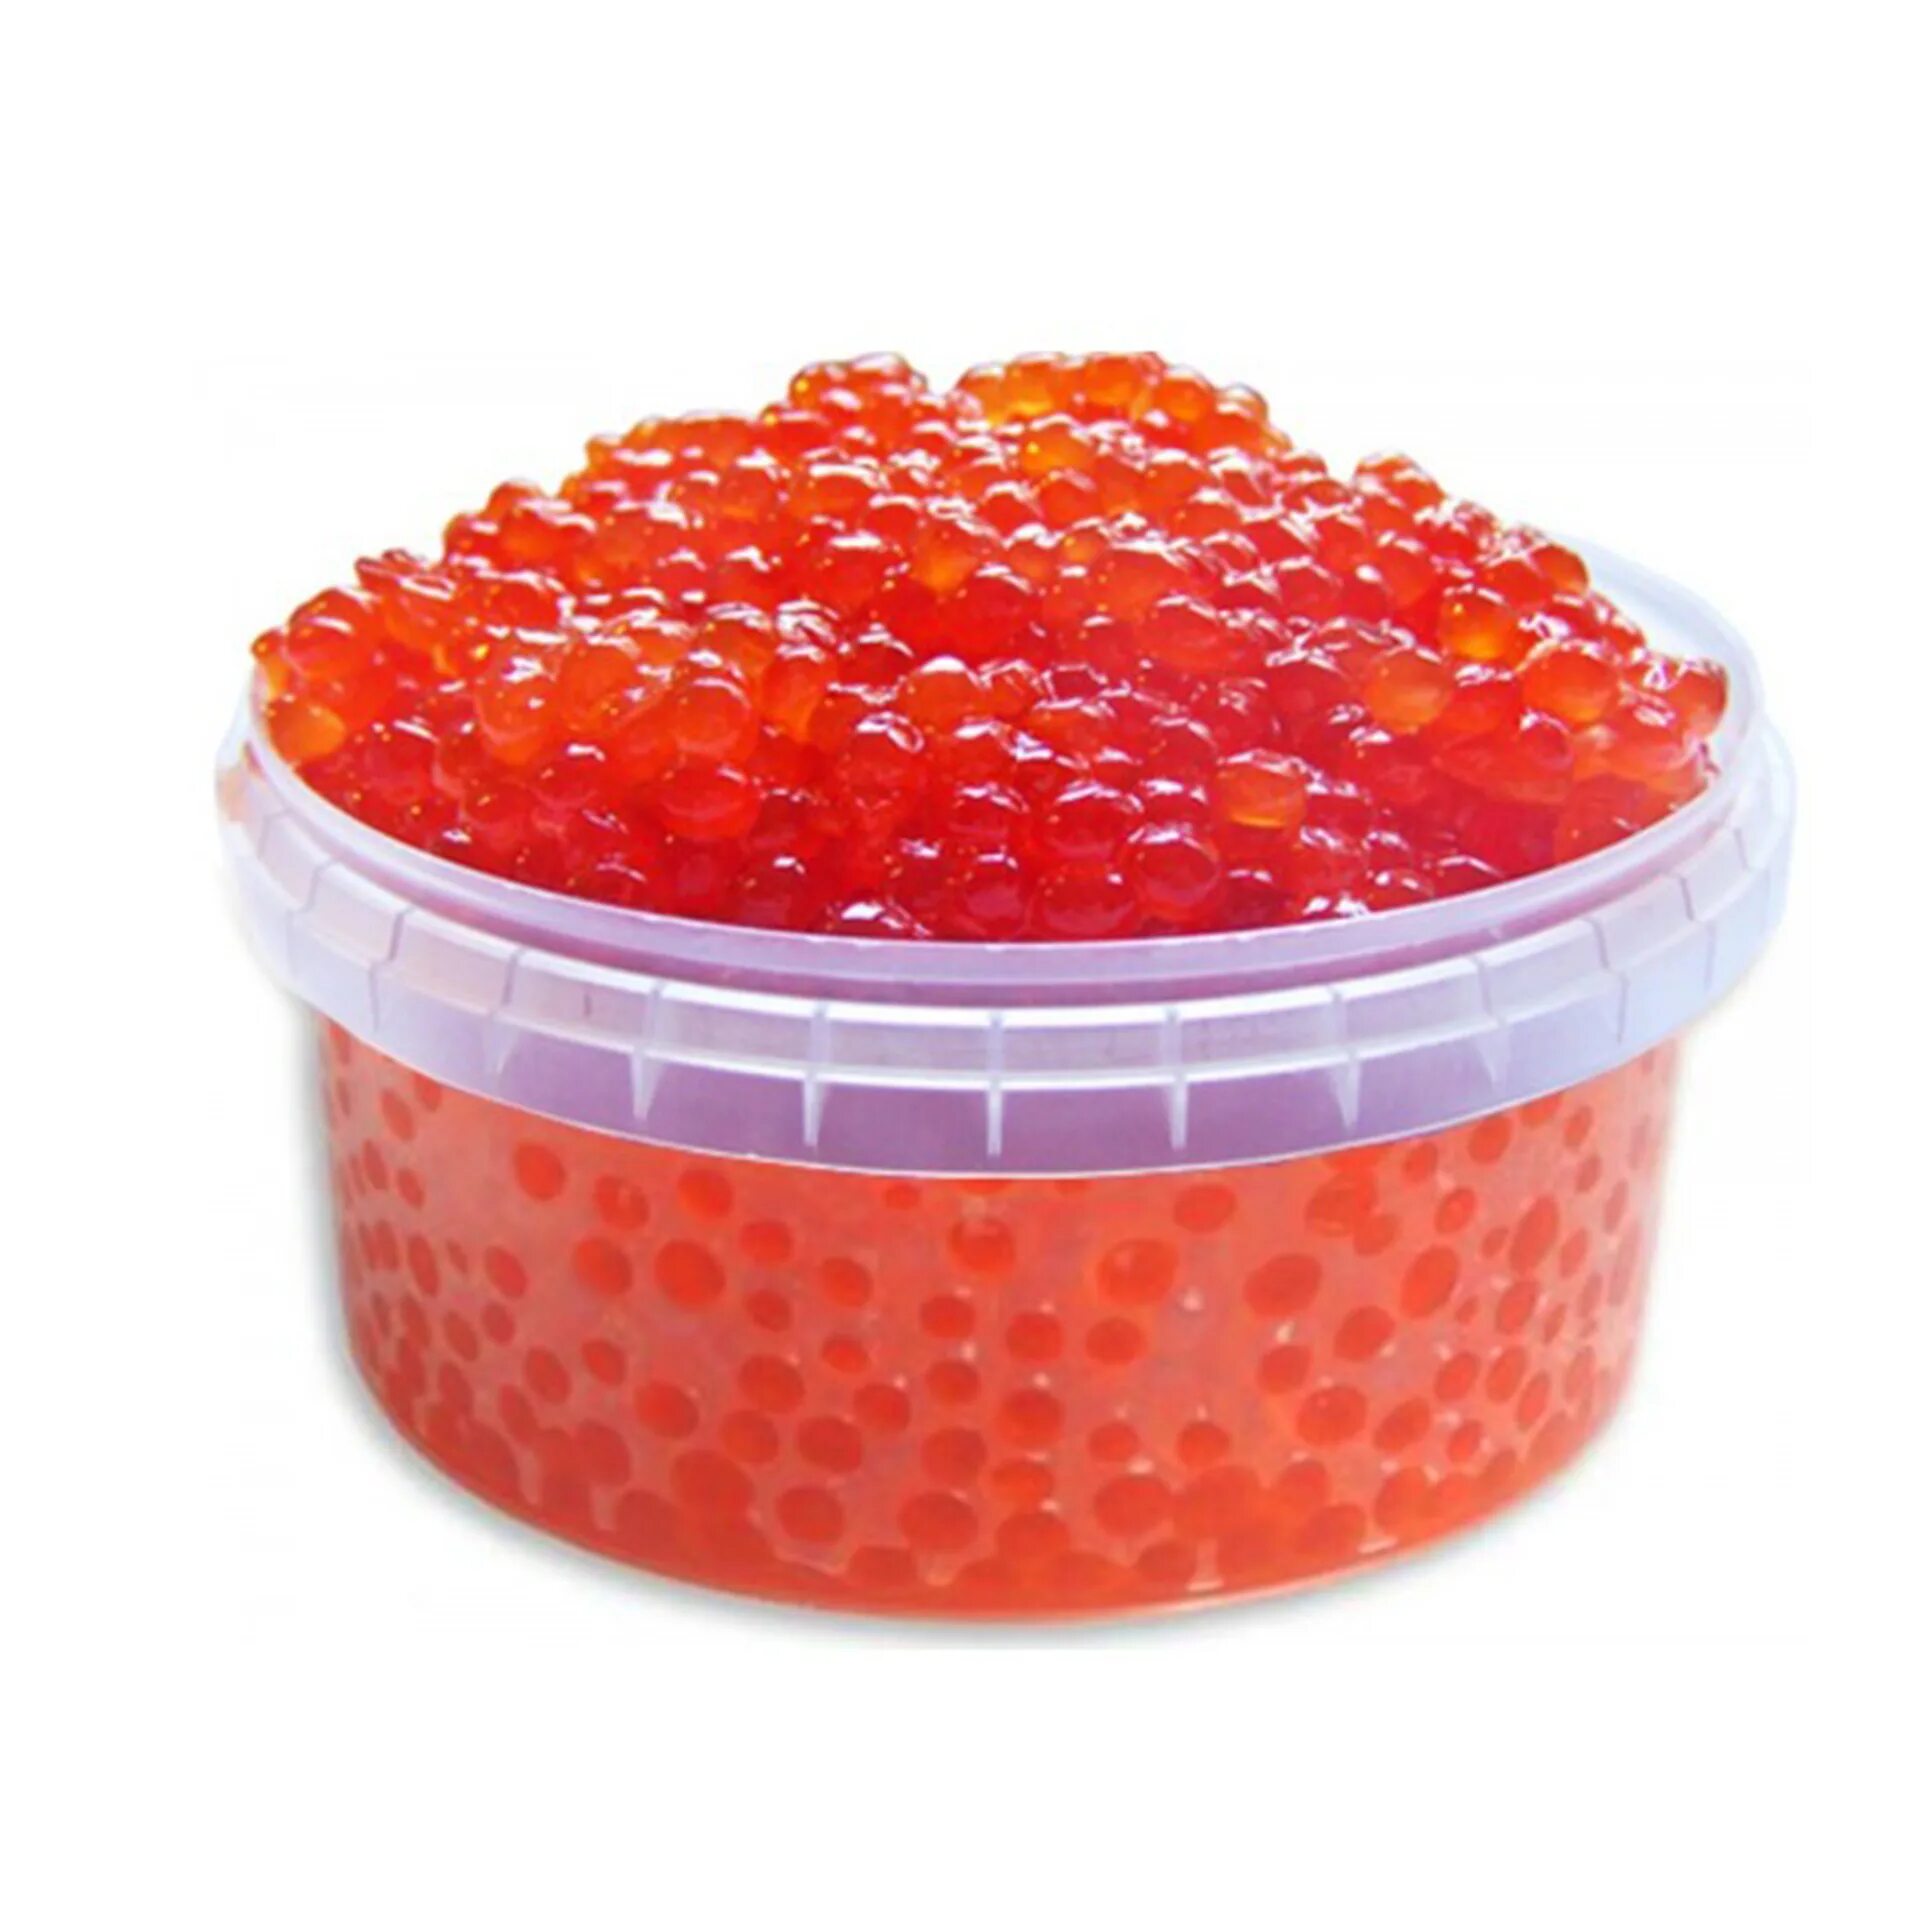 Икра горбуши, 500 гр. Икра Caviar Premium красная. Икра форели Карелия 500 гр.. Икра нерки 500 гр. Икра форели или горбуши